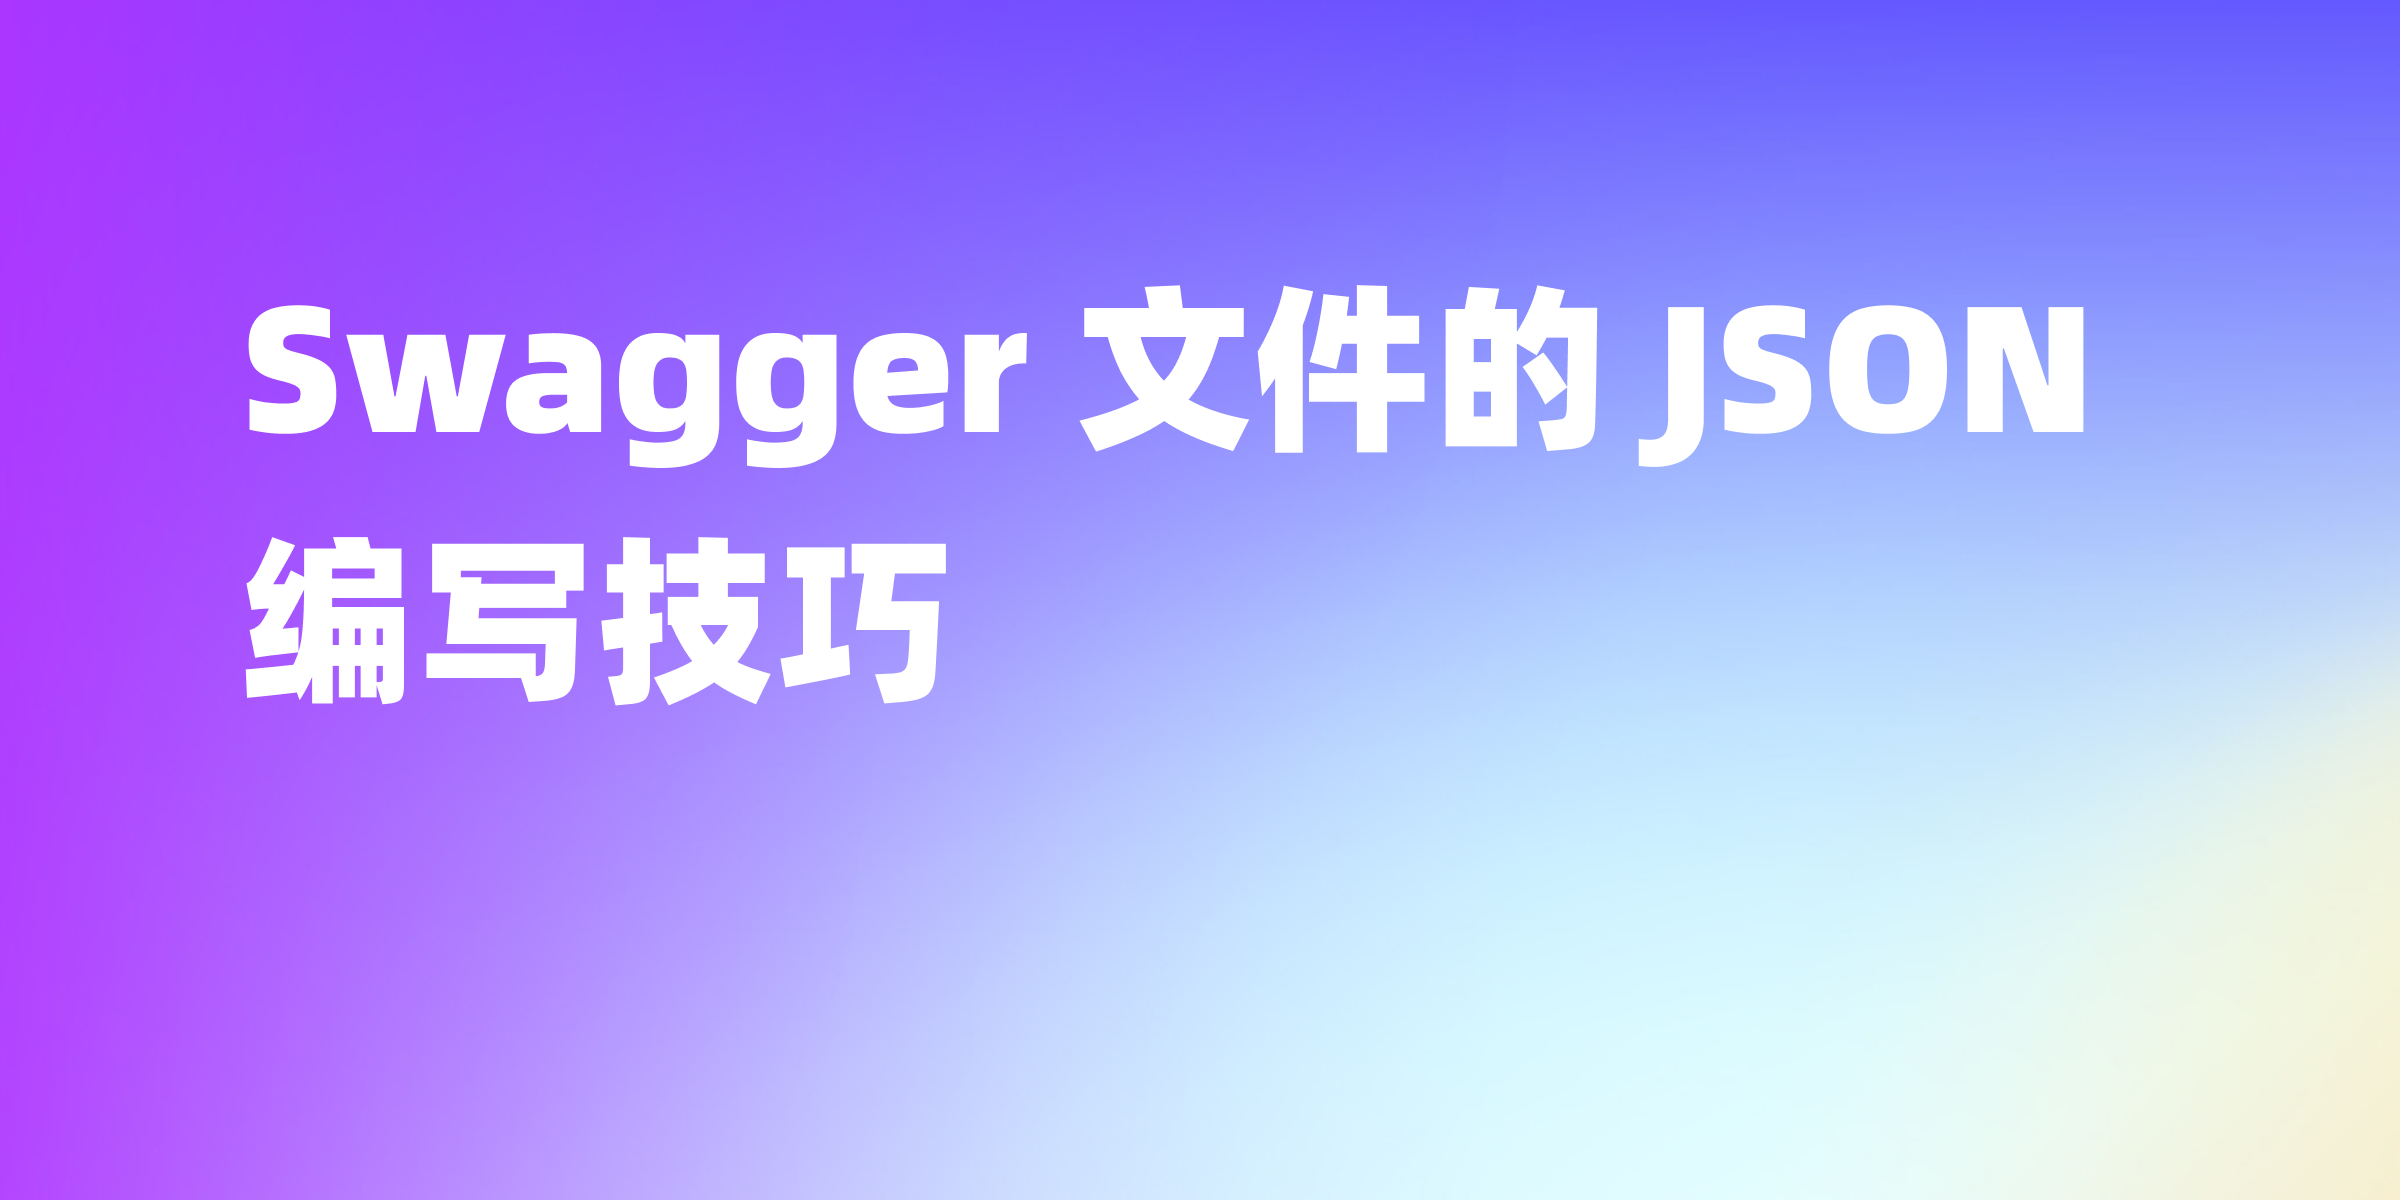 Swagger JSON：Swagger 文件中的 JSON 写法详解